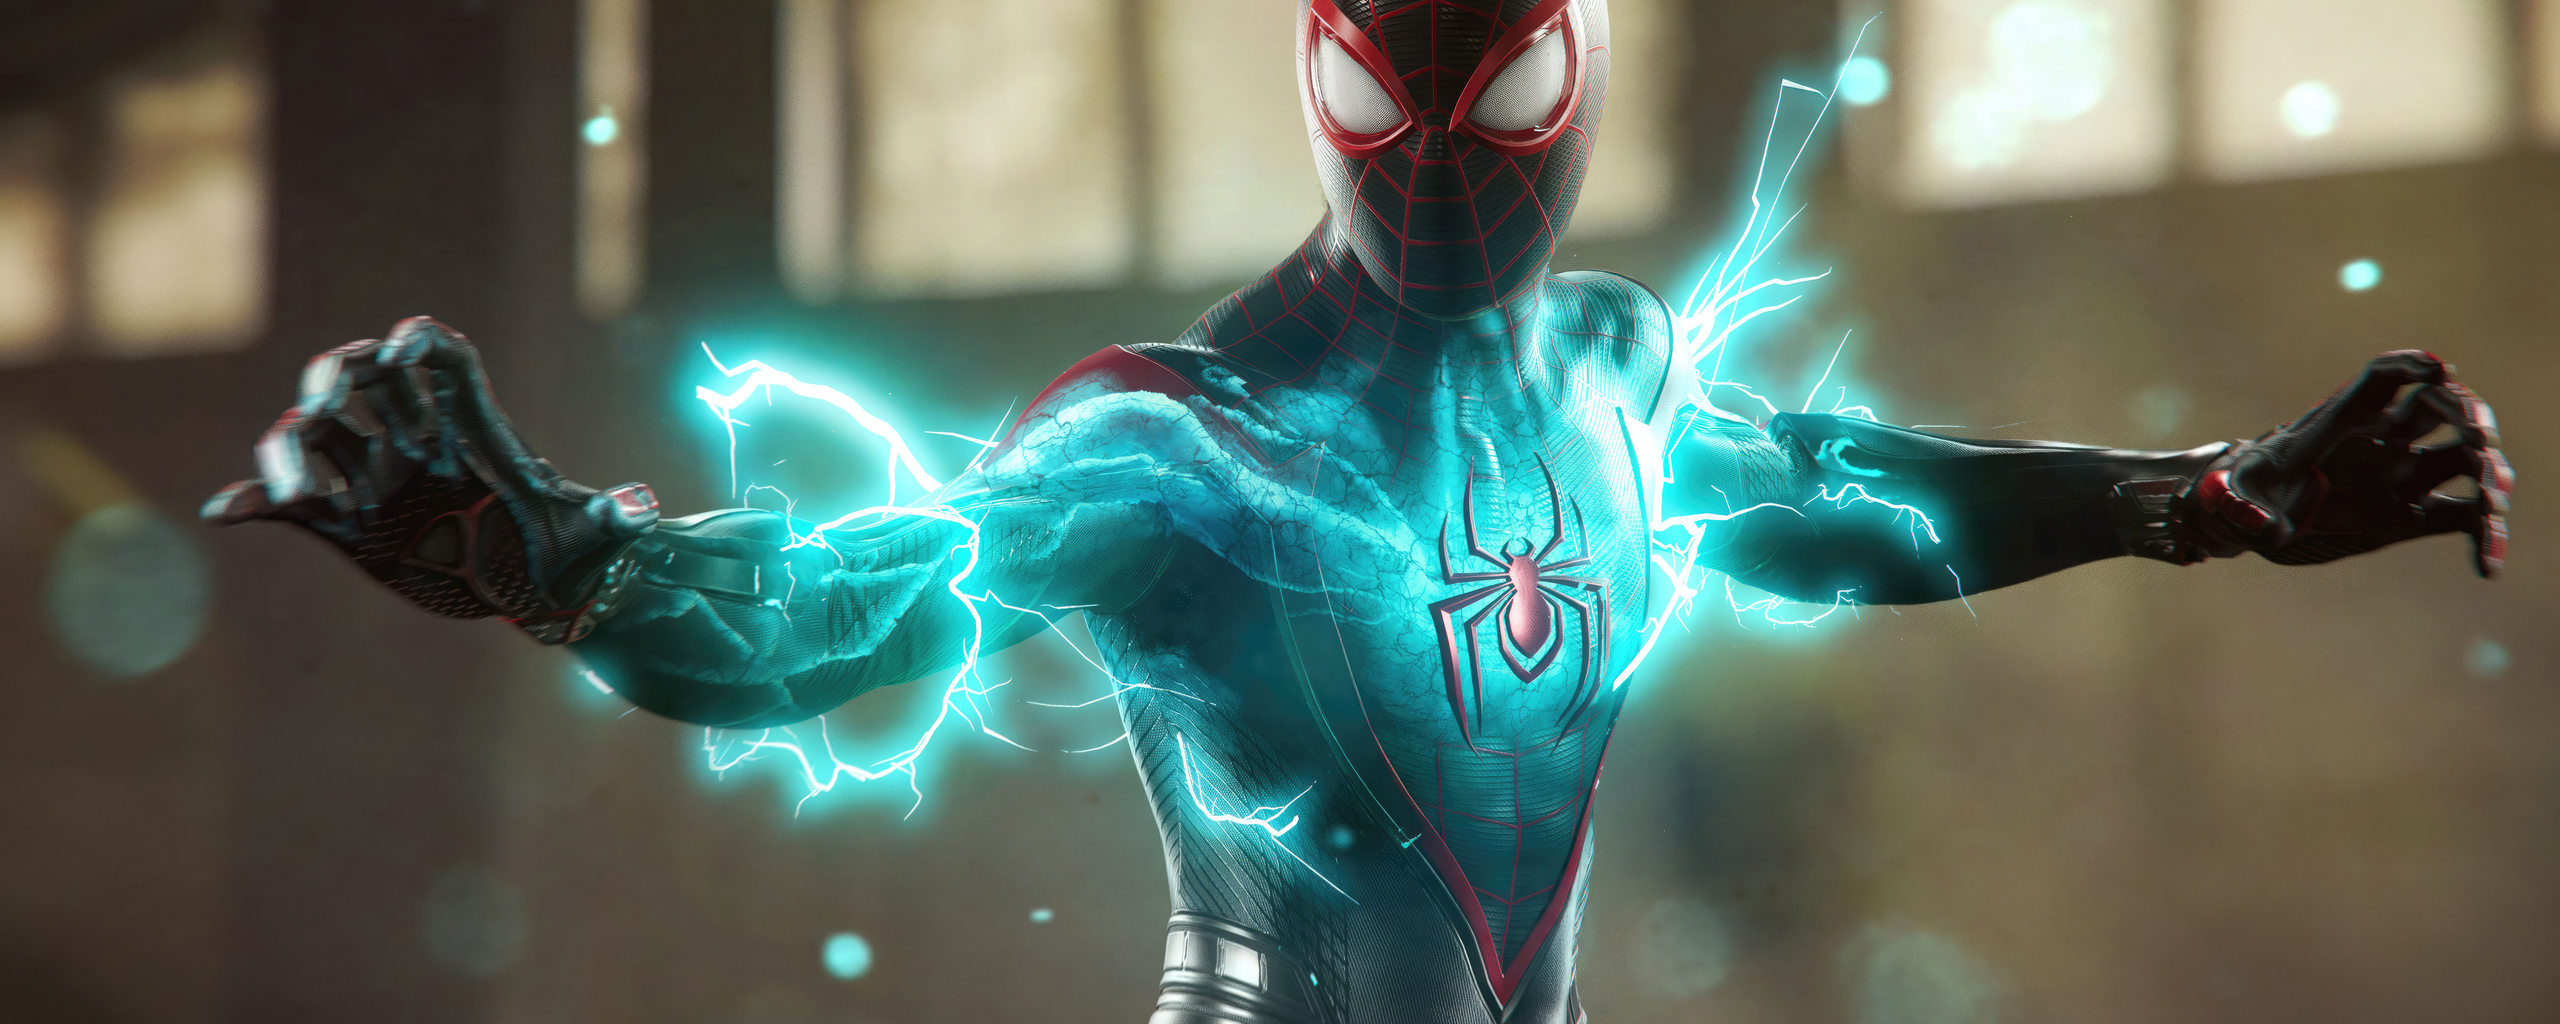 marvels-spiderman2-13.jpg